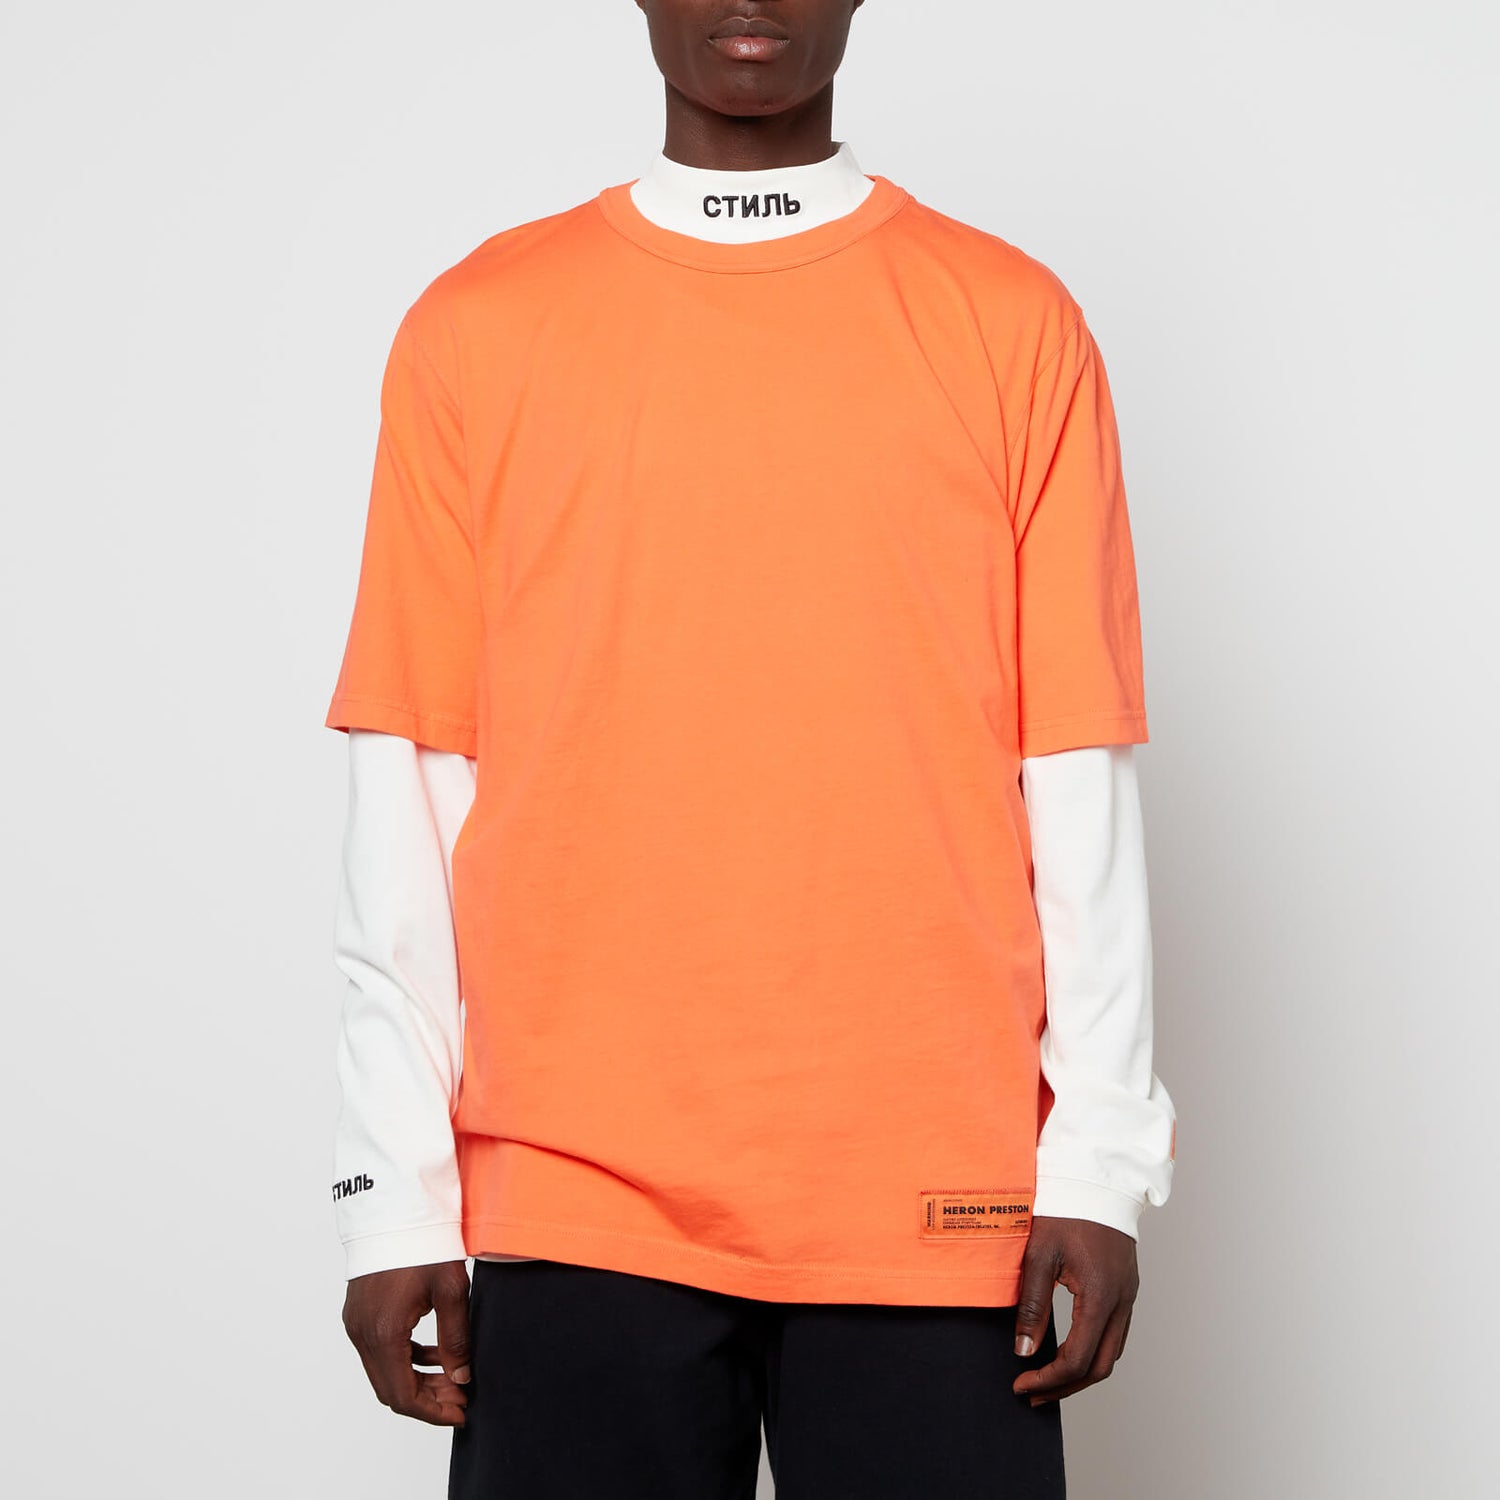 Heron Preston Men's Recycled Cotton T-Shirt - Orange - S